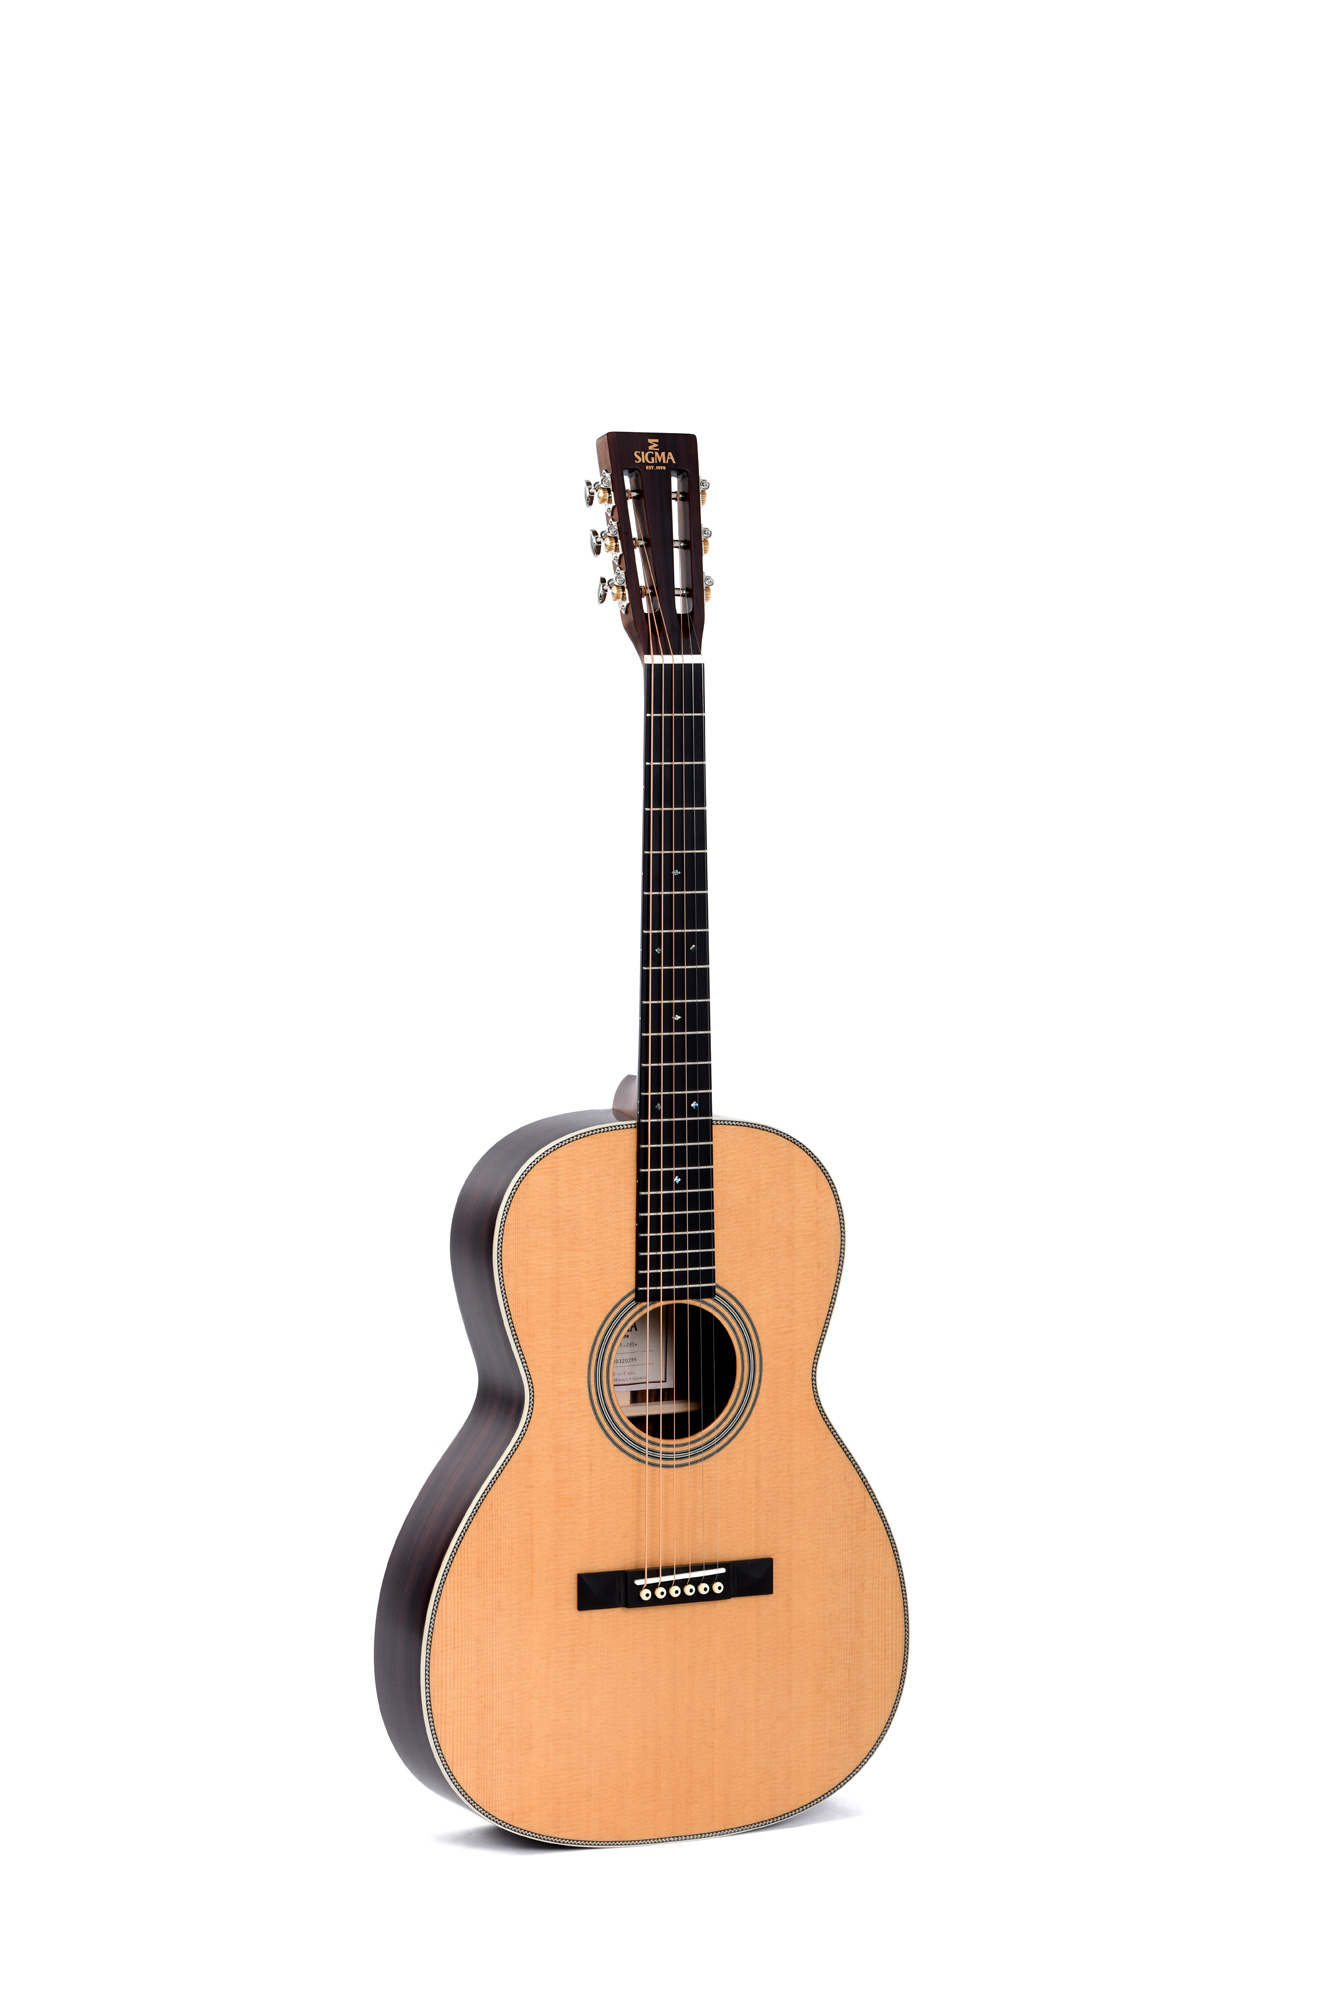 Sigma Guitars 000T-28SE Limited Run